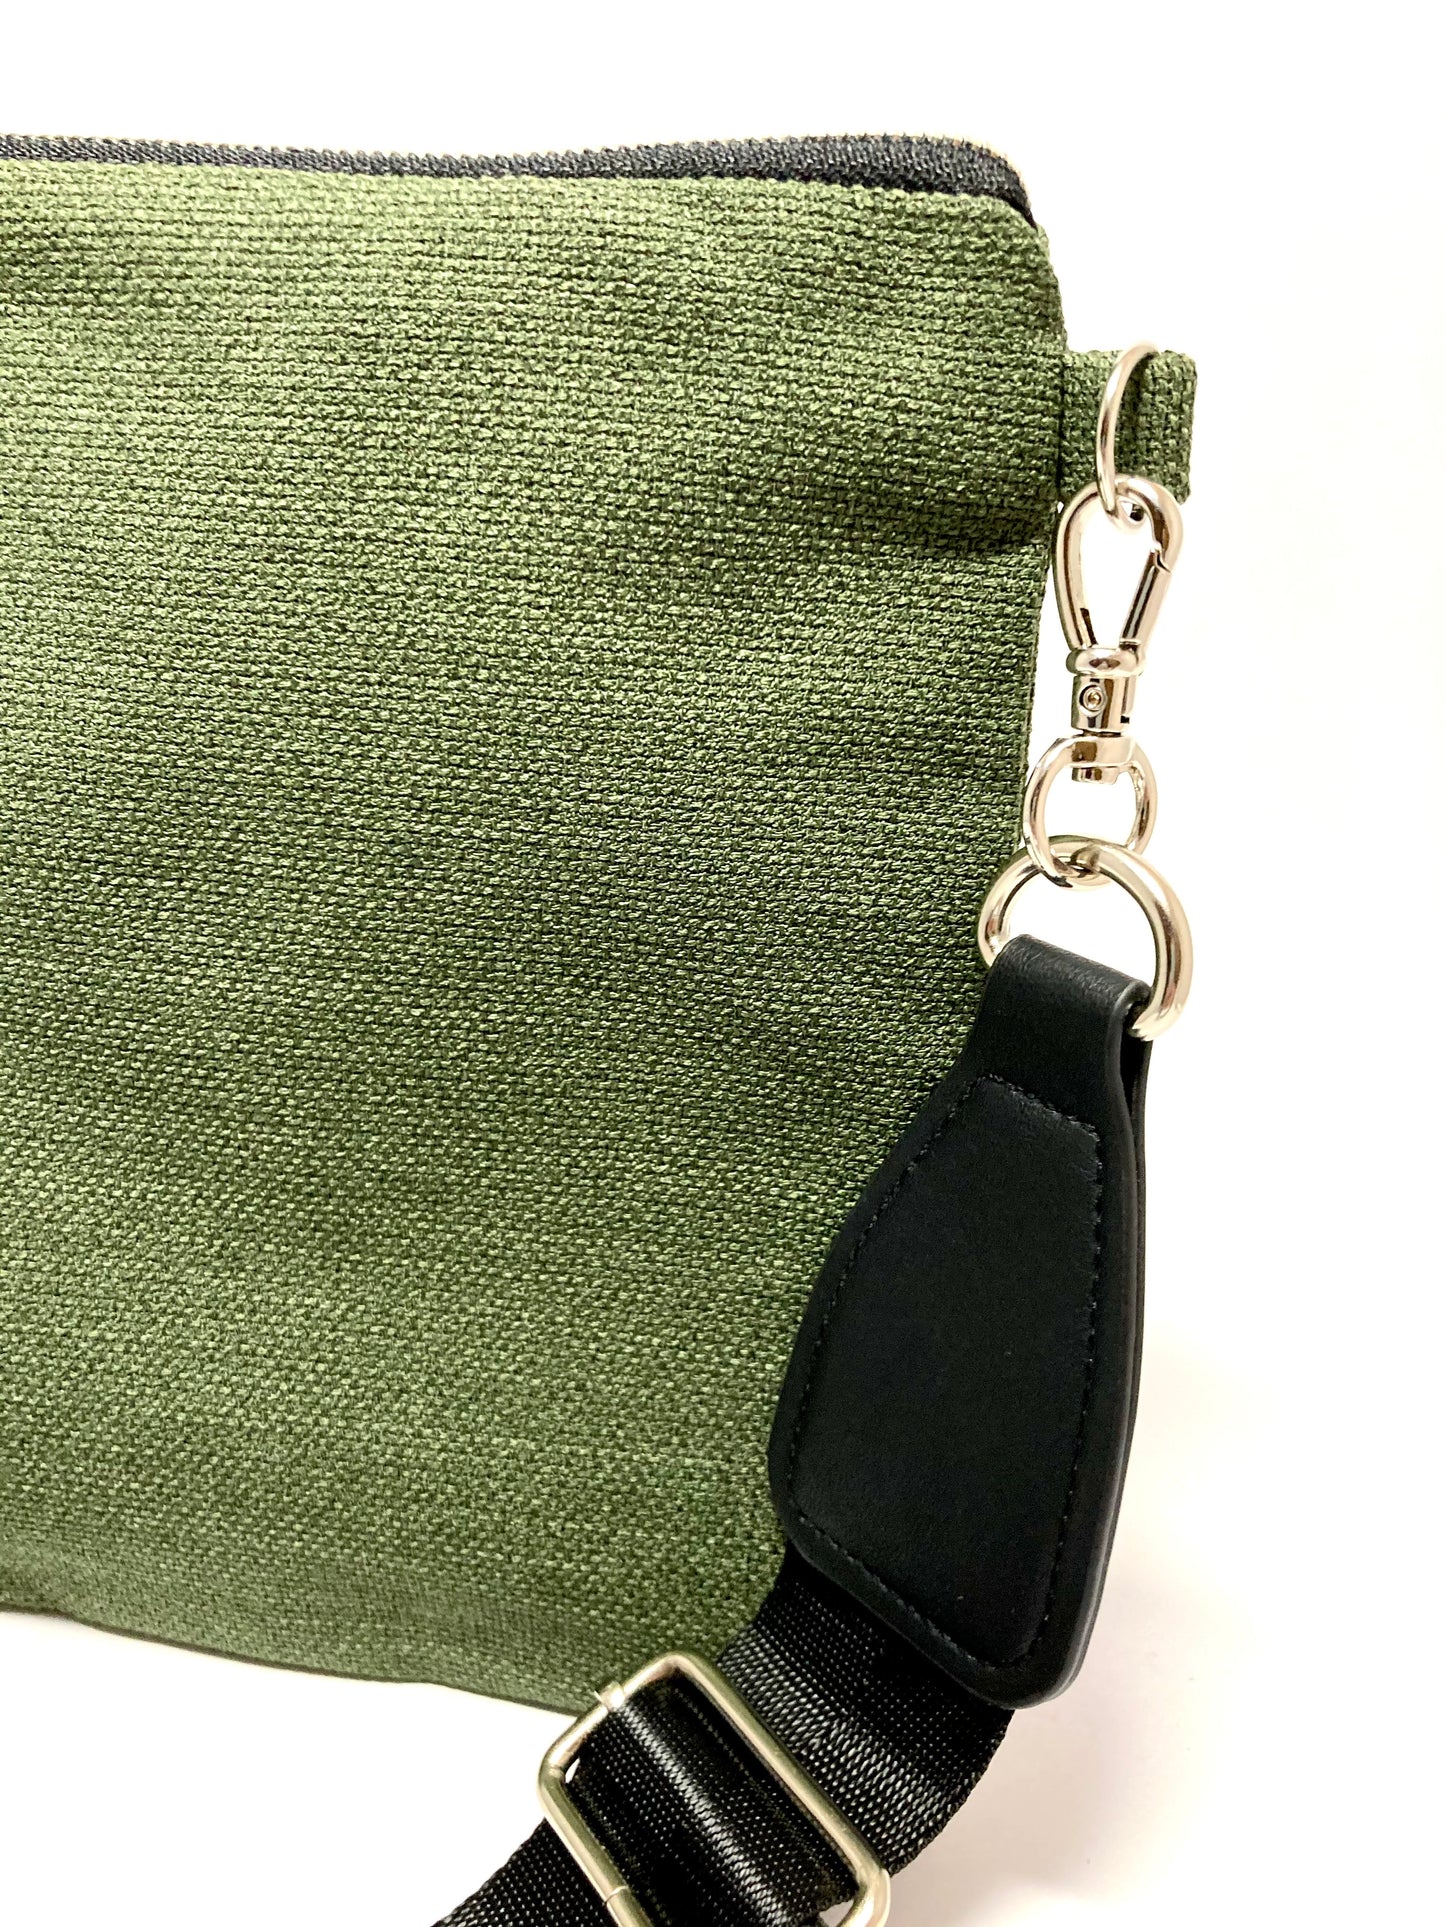 Green crossbody bag with tassel